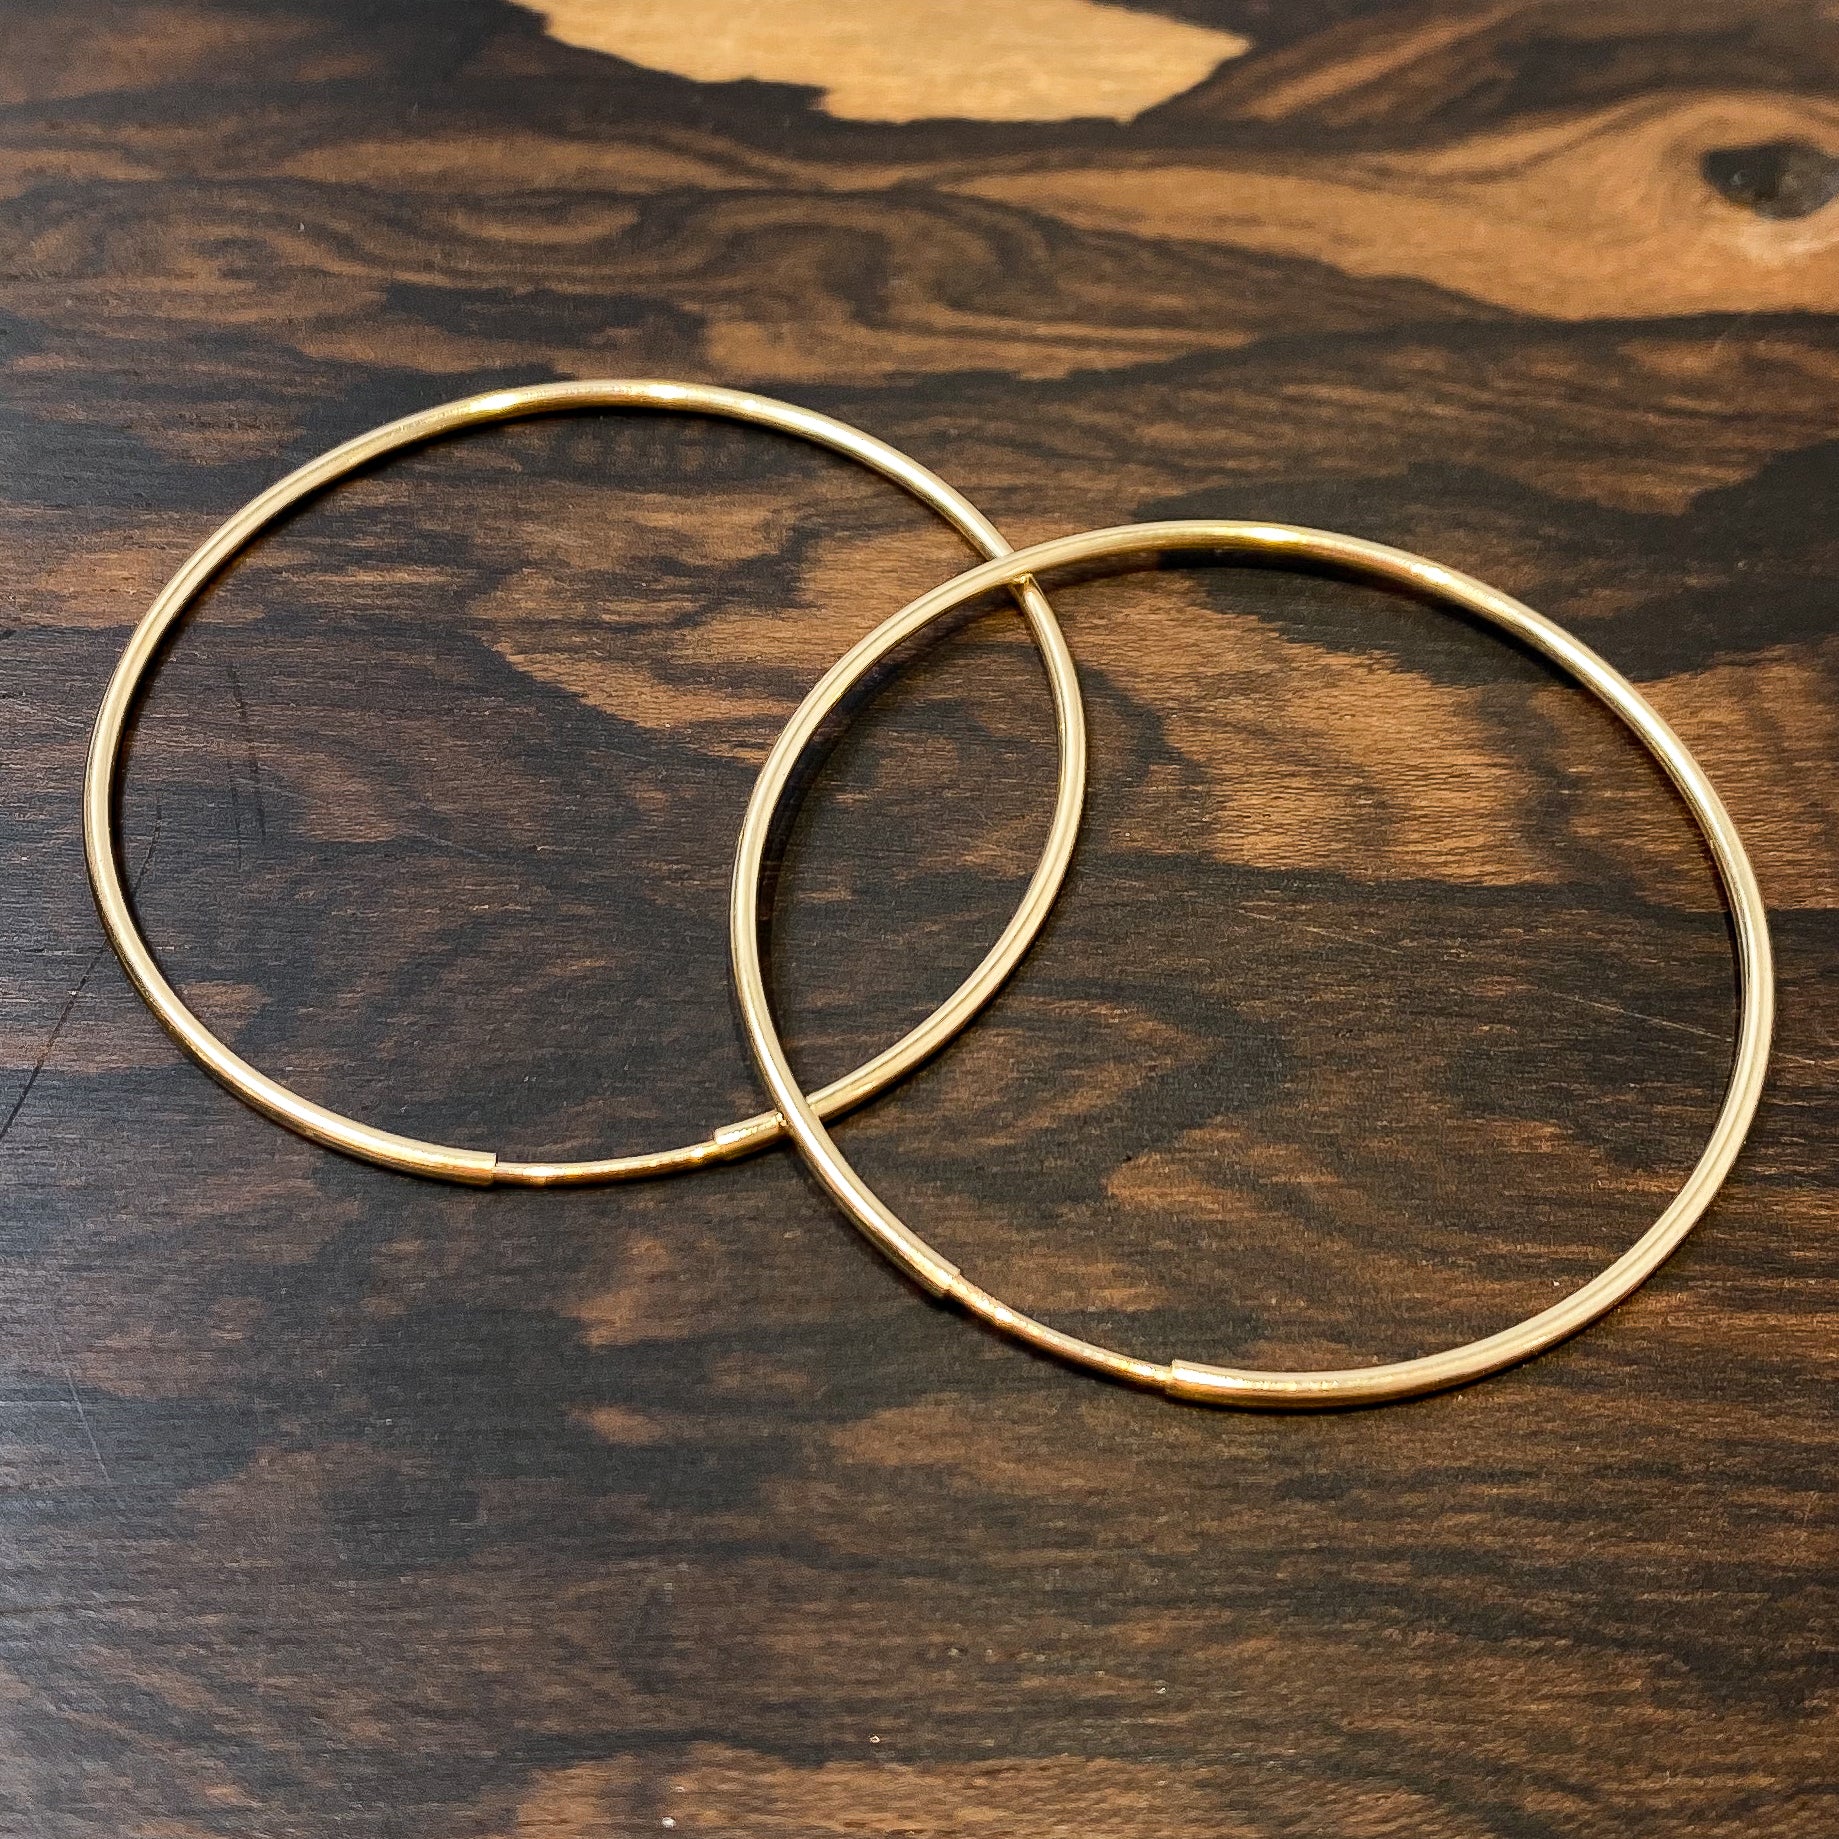 45mm Endless Hoop Earring (3 Metals Available) - 1 pair